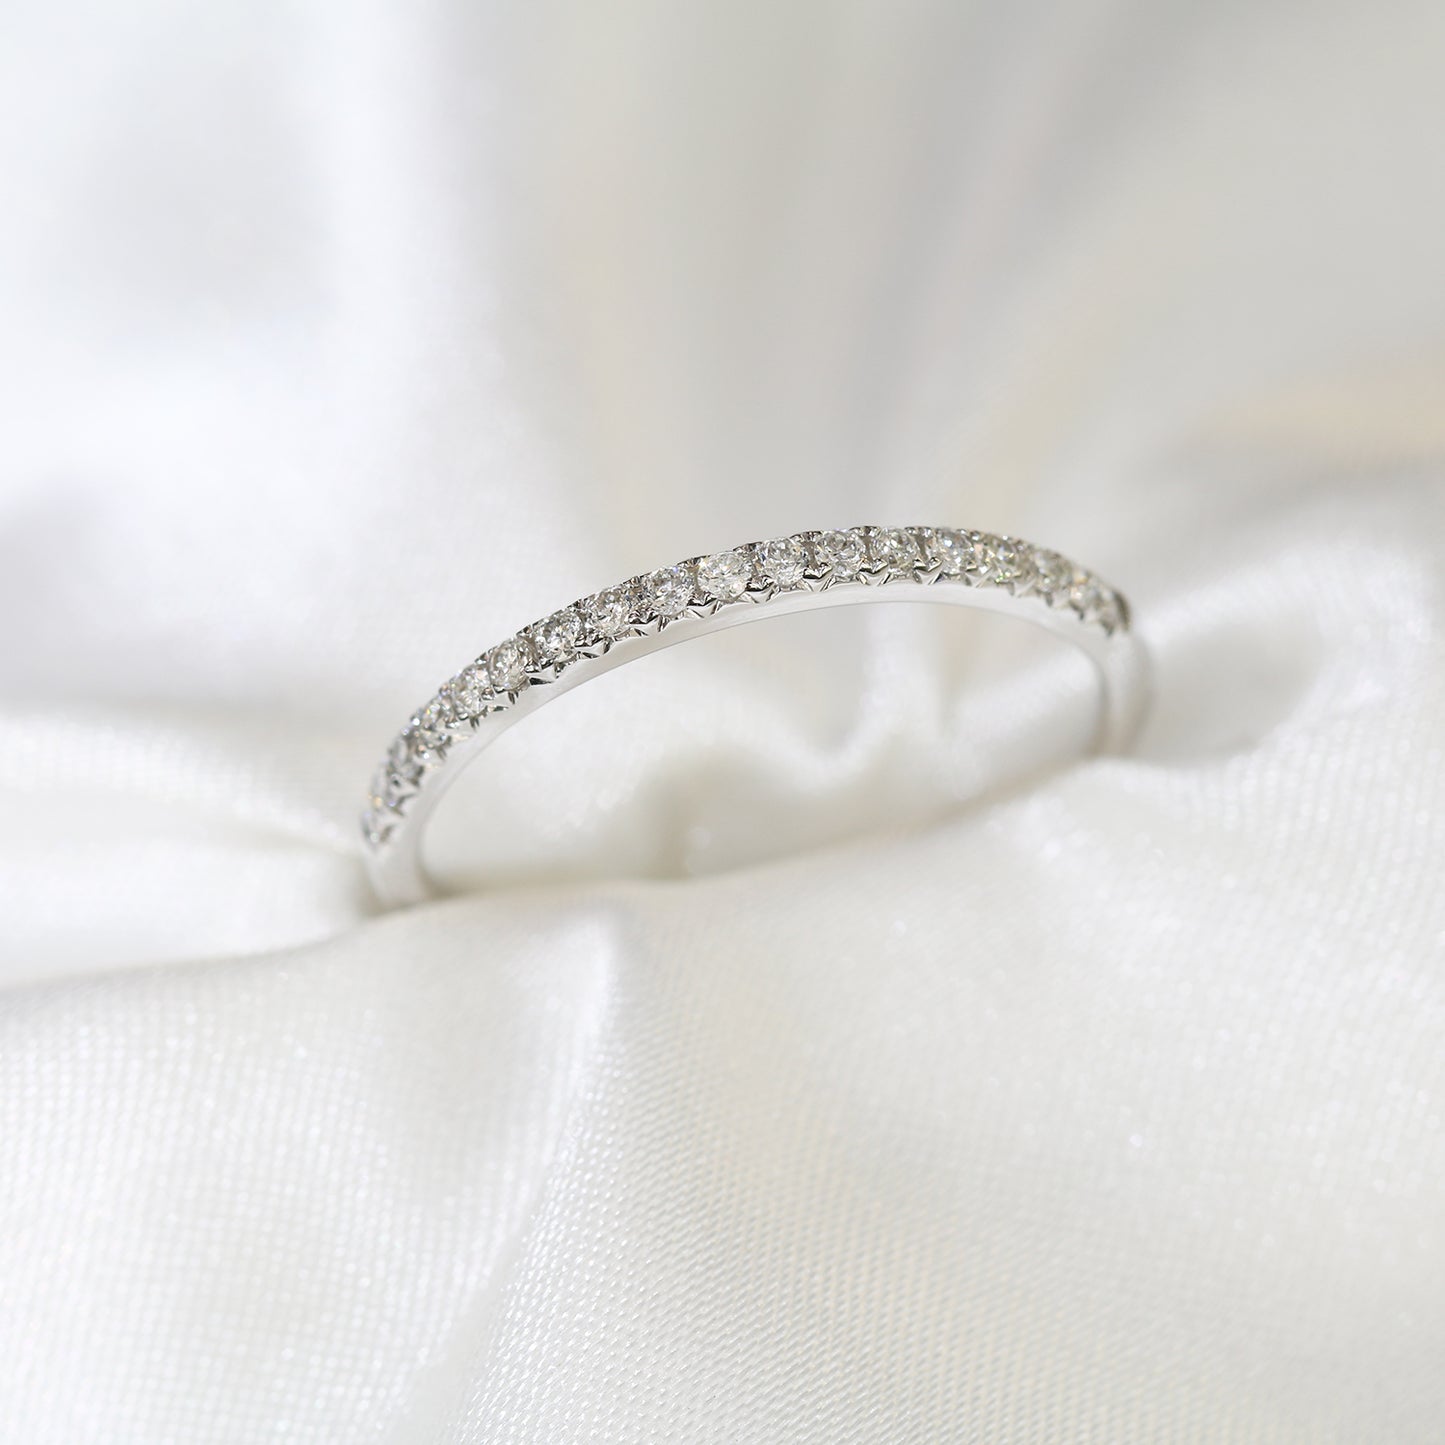   18k白金鑽石戒指 18k White Gold Eternity Diamond Ring